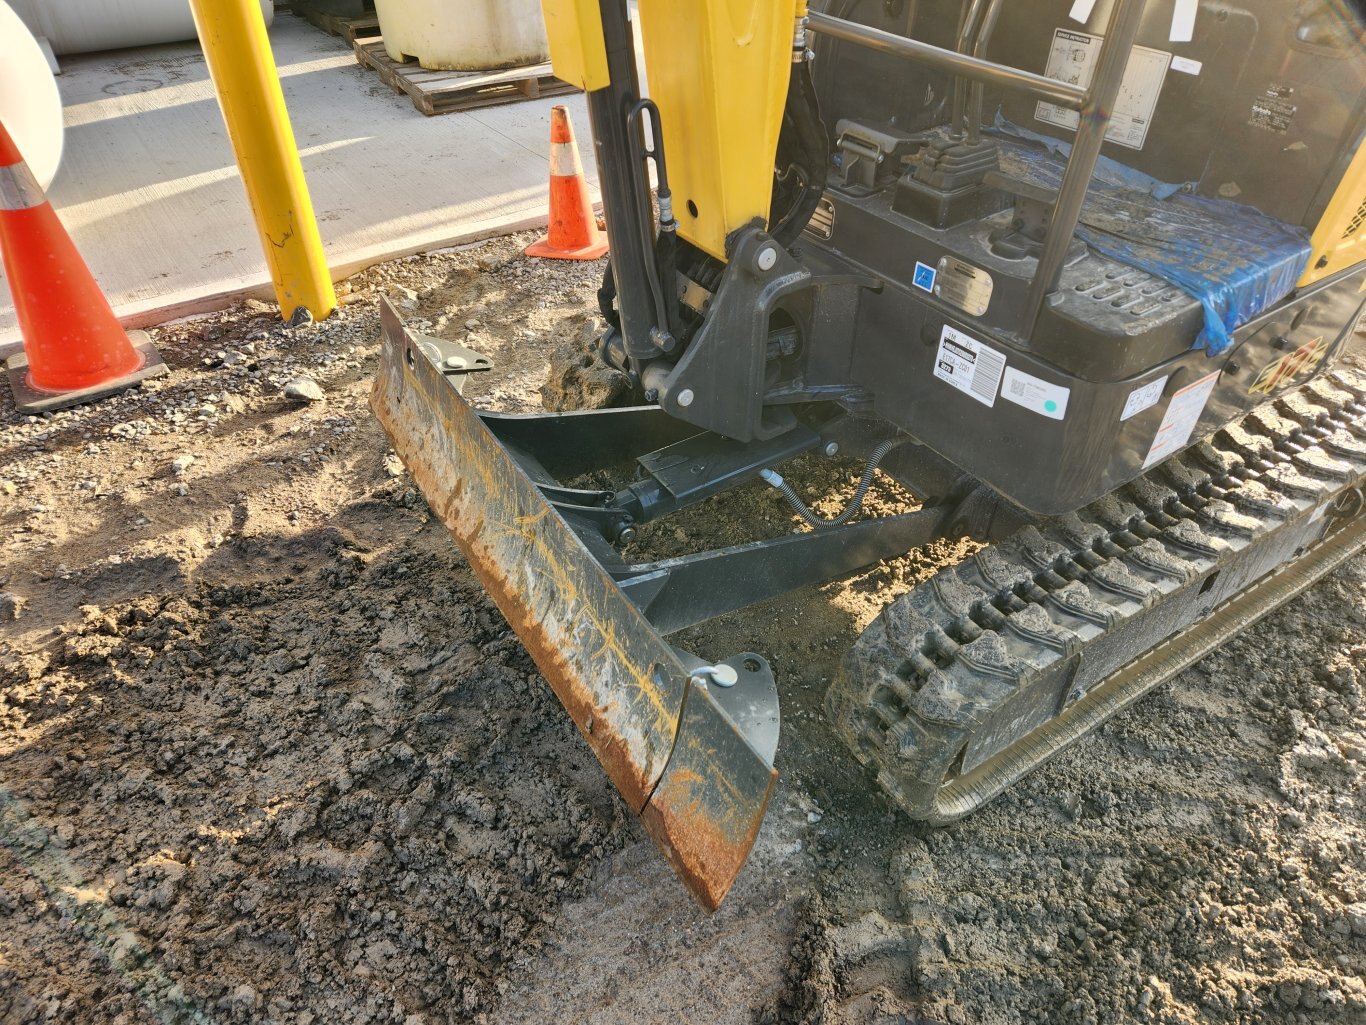 New Holland E17C compact excavator